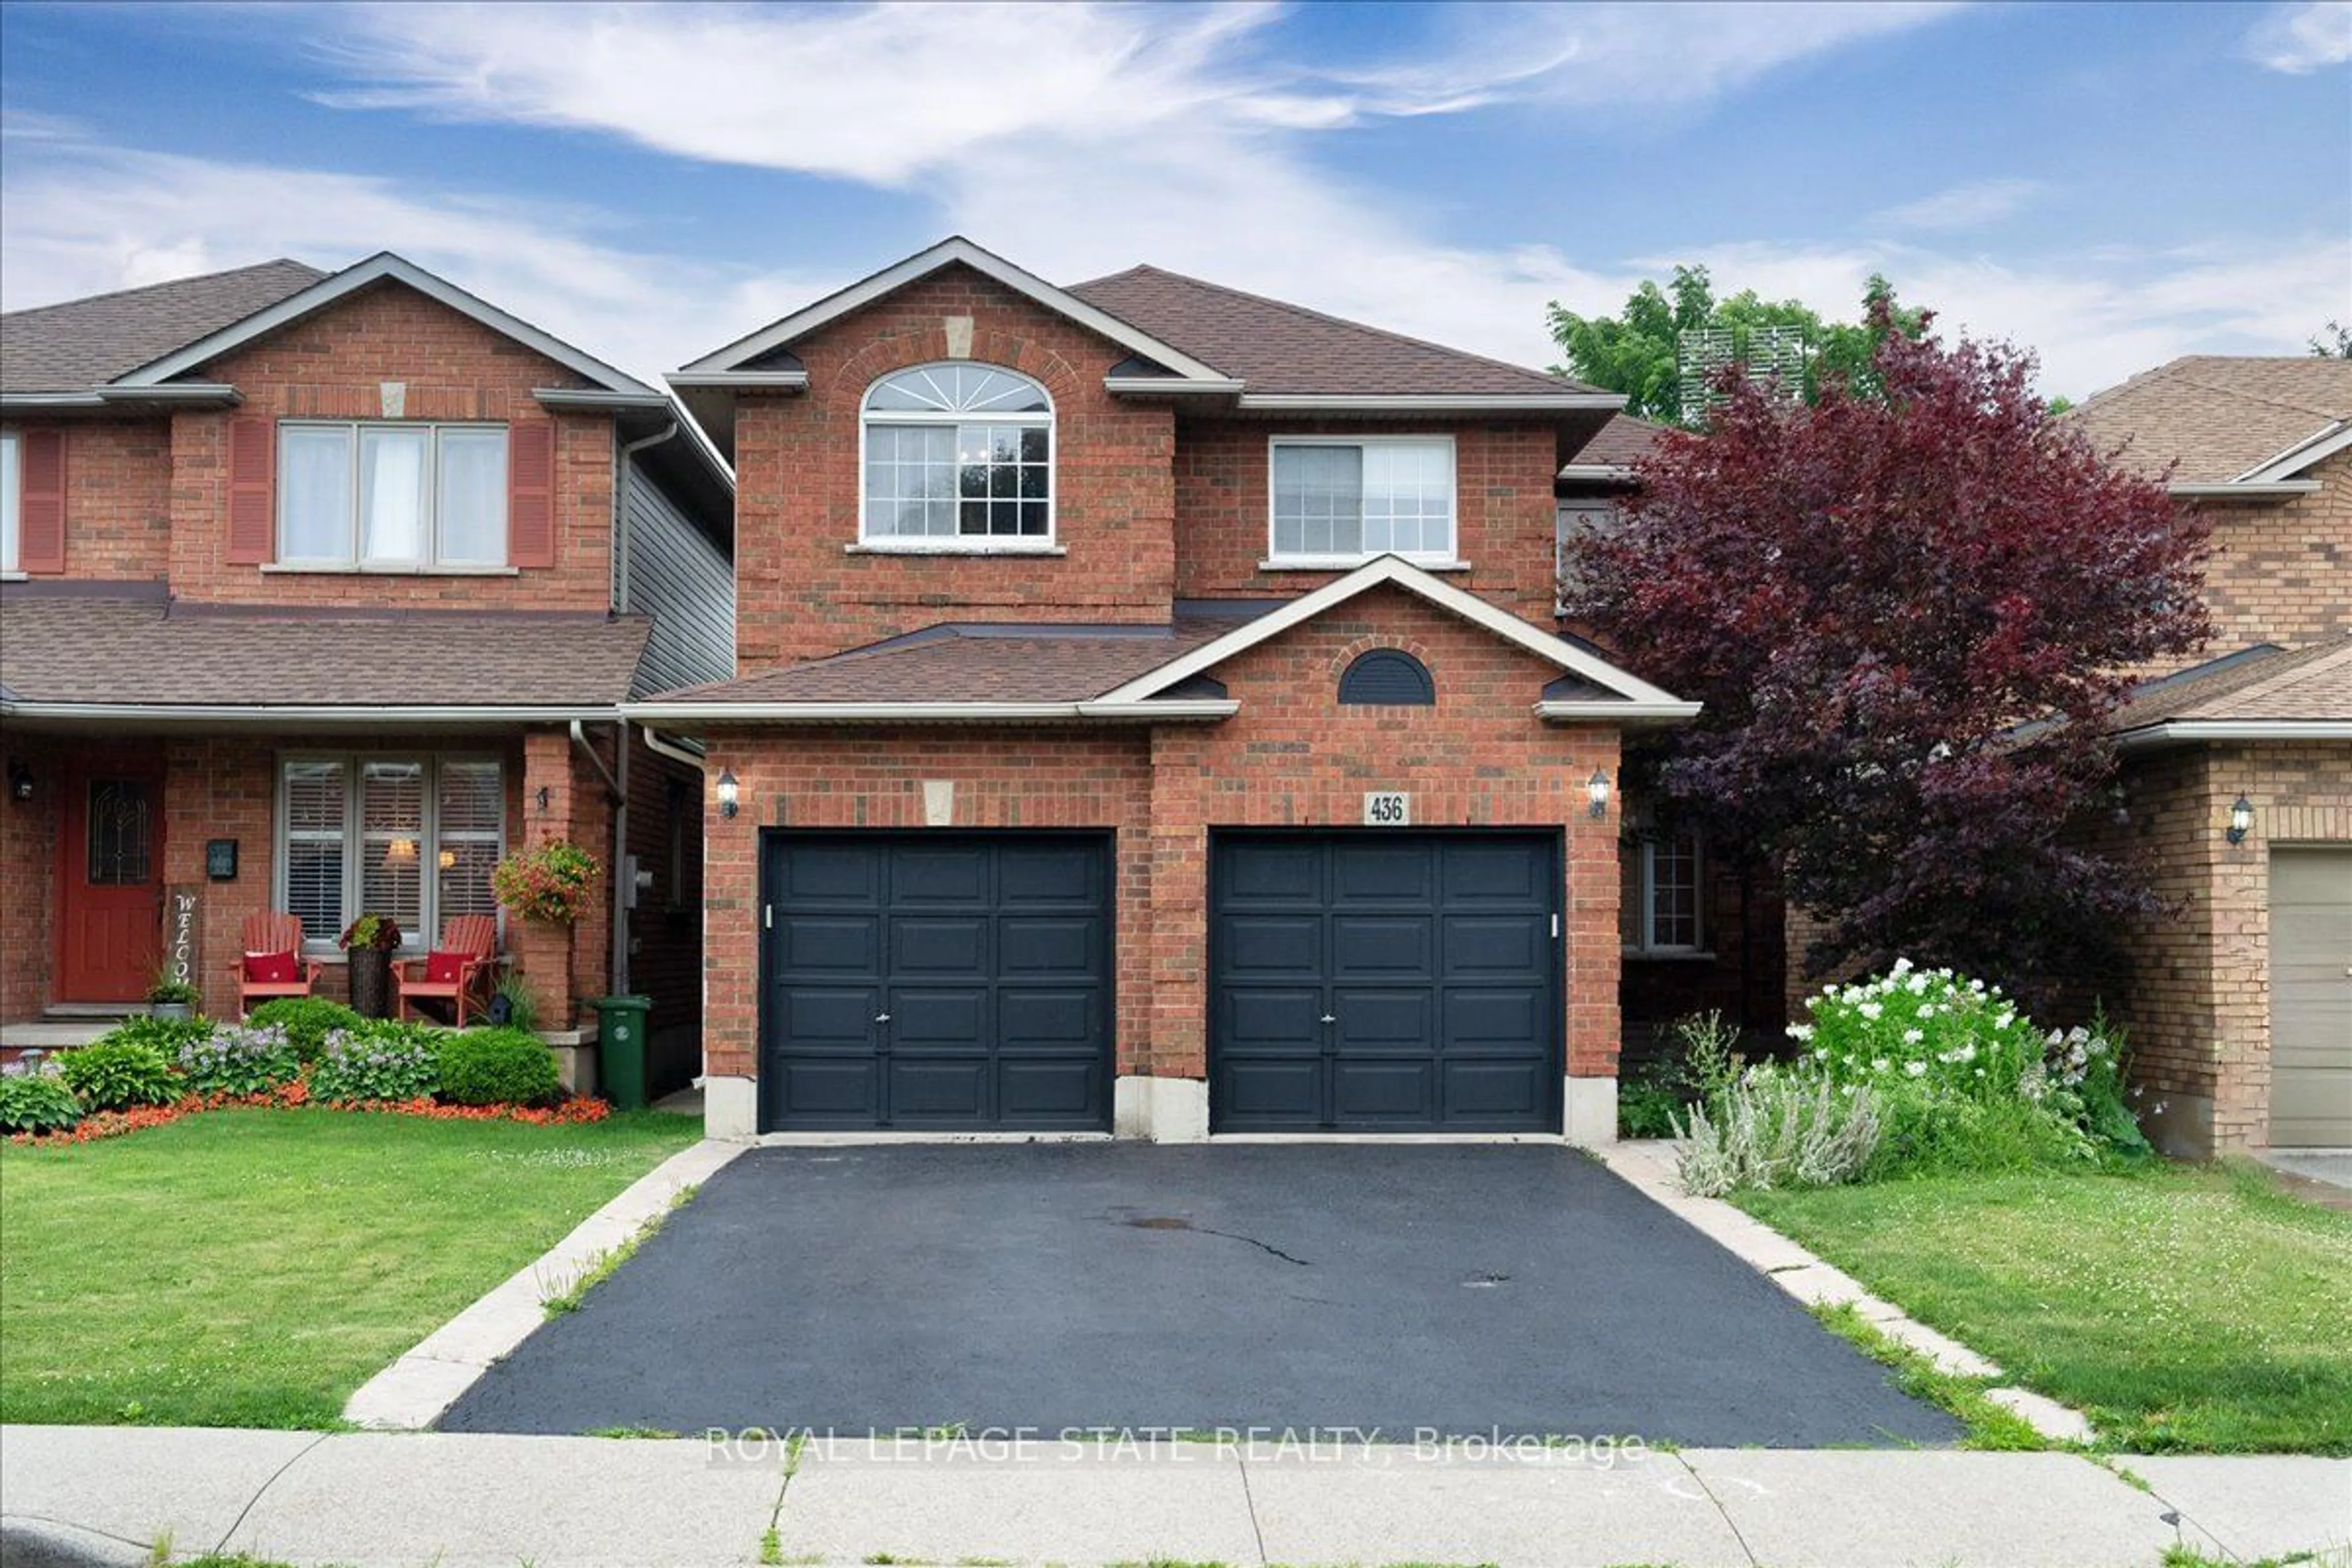 Home with brick exterior material for 436 Jacqueline Blvd, Hamilton Ontario L9B 2R3